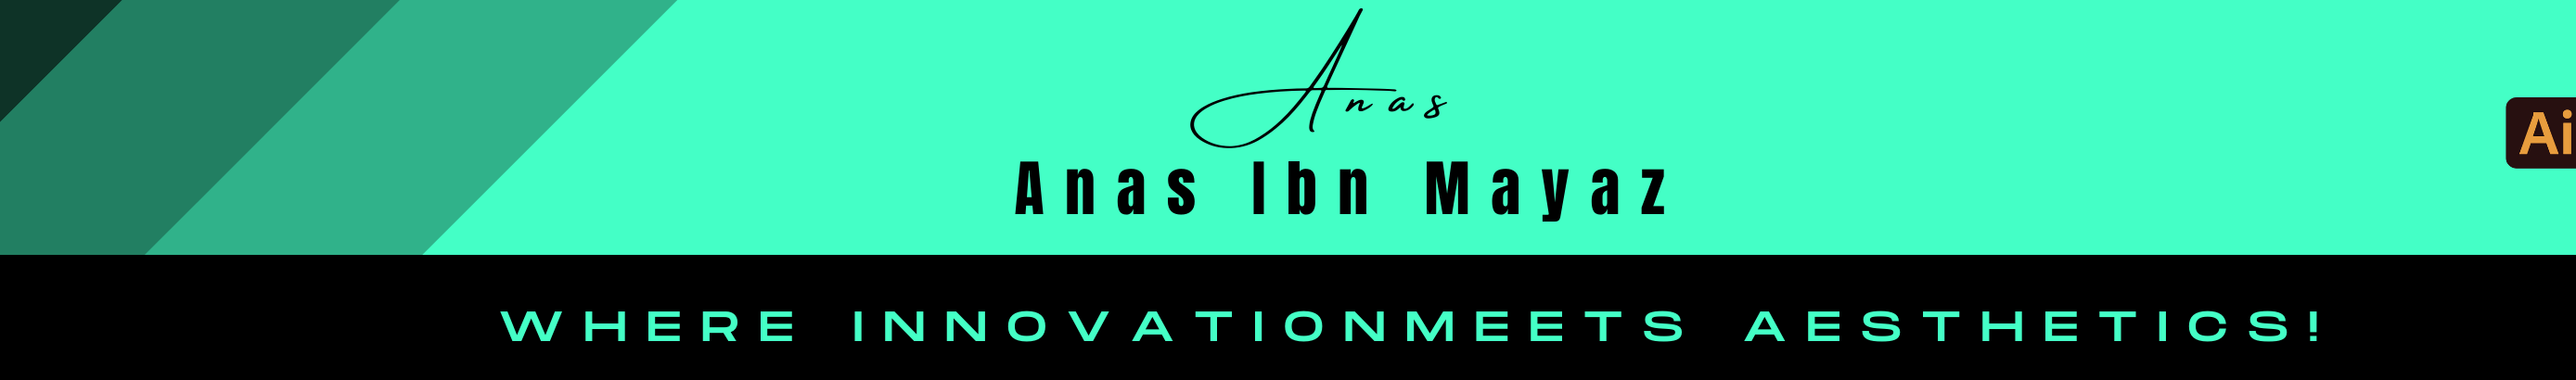 Anas Ibn Mayaz's profile banner